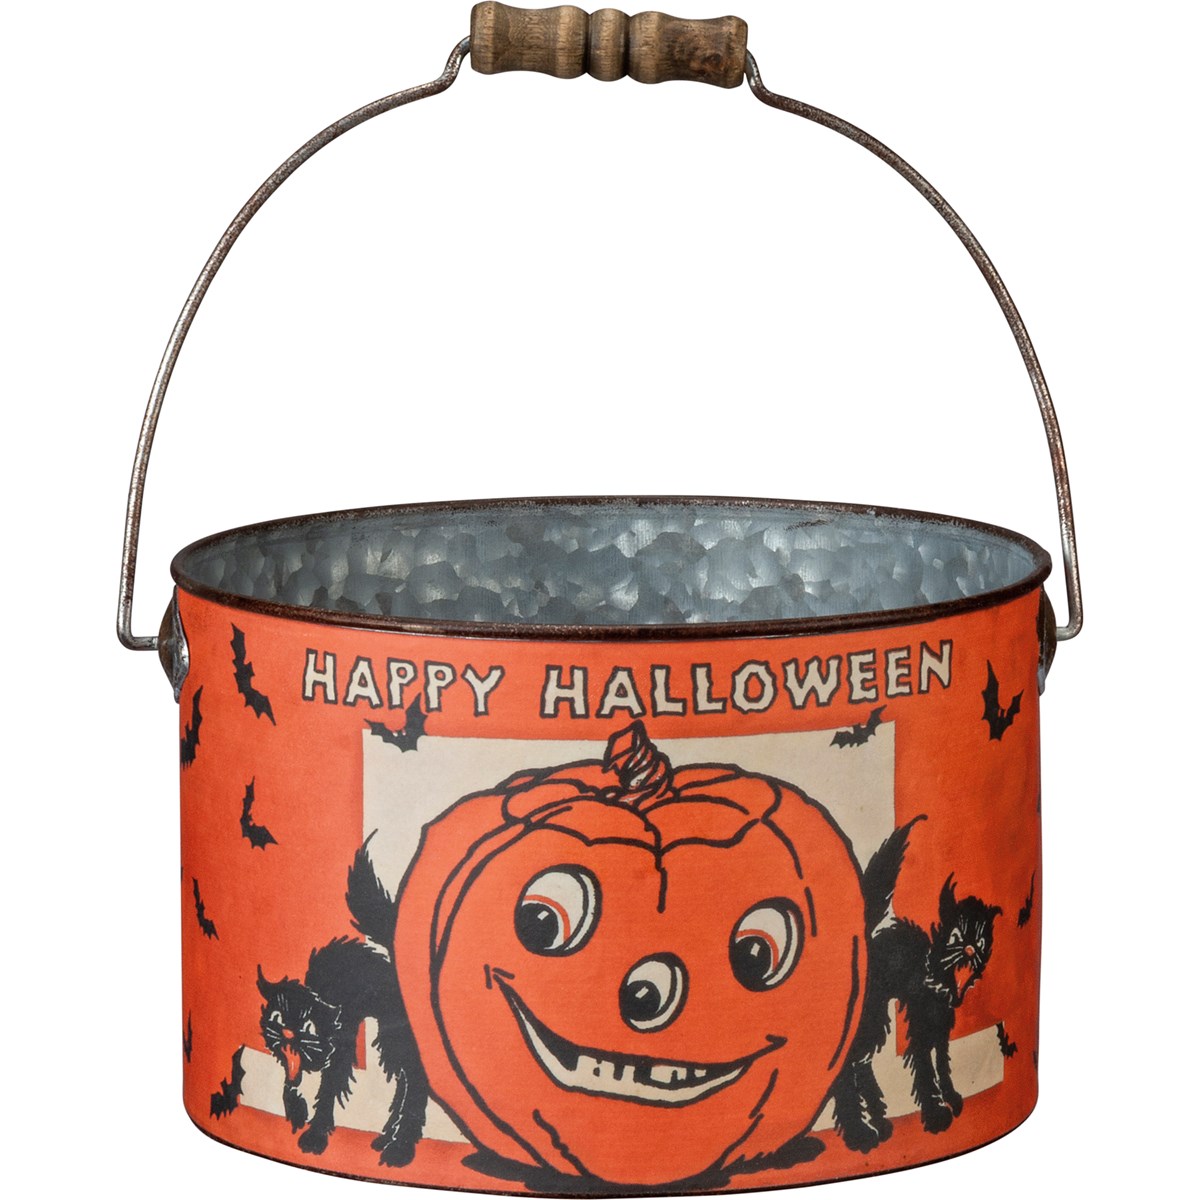 Happy Halloween Vintage Bucket Set - Metal, Paper, Wood